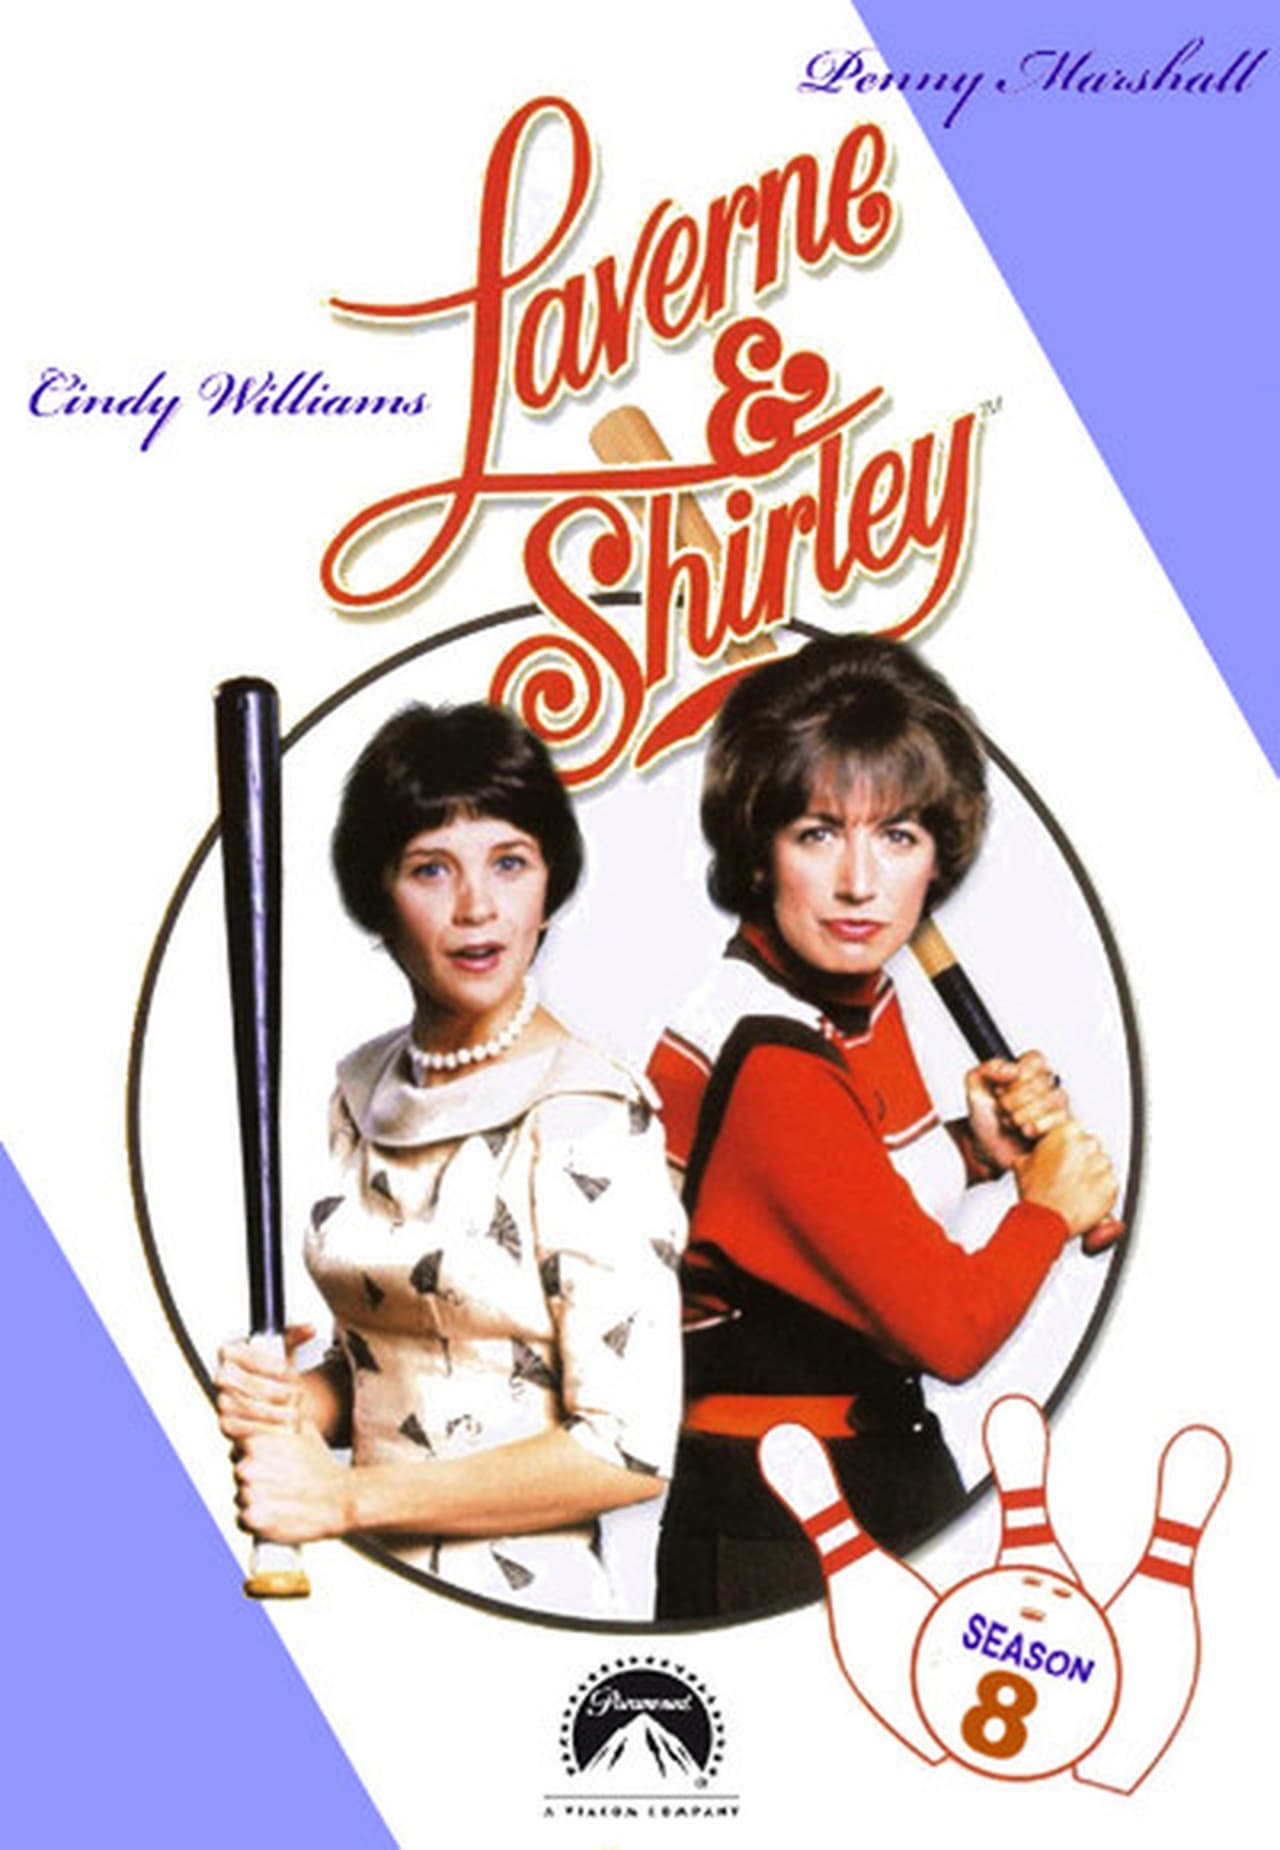 Laverne & Shirley Season 8